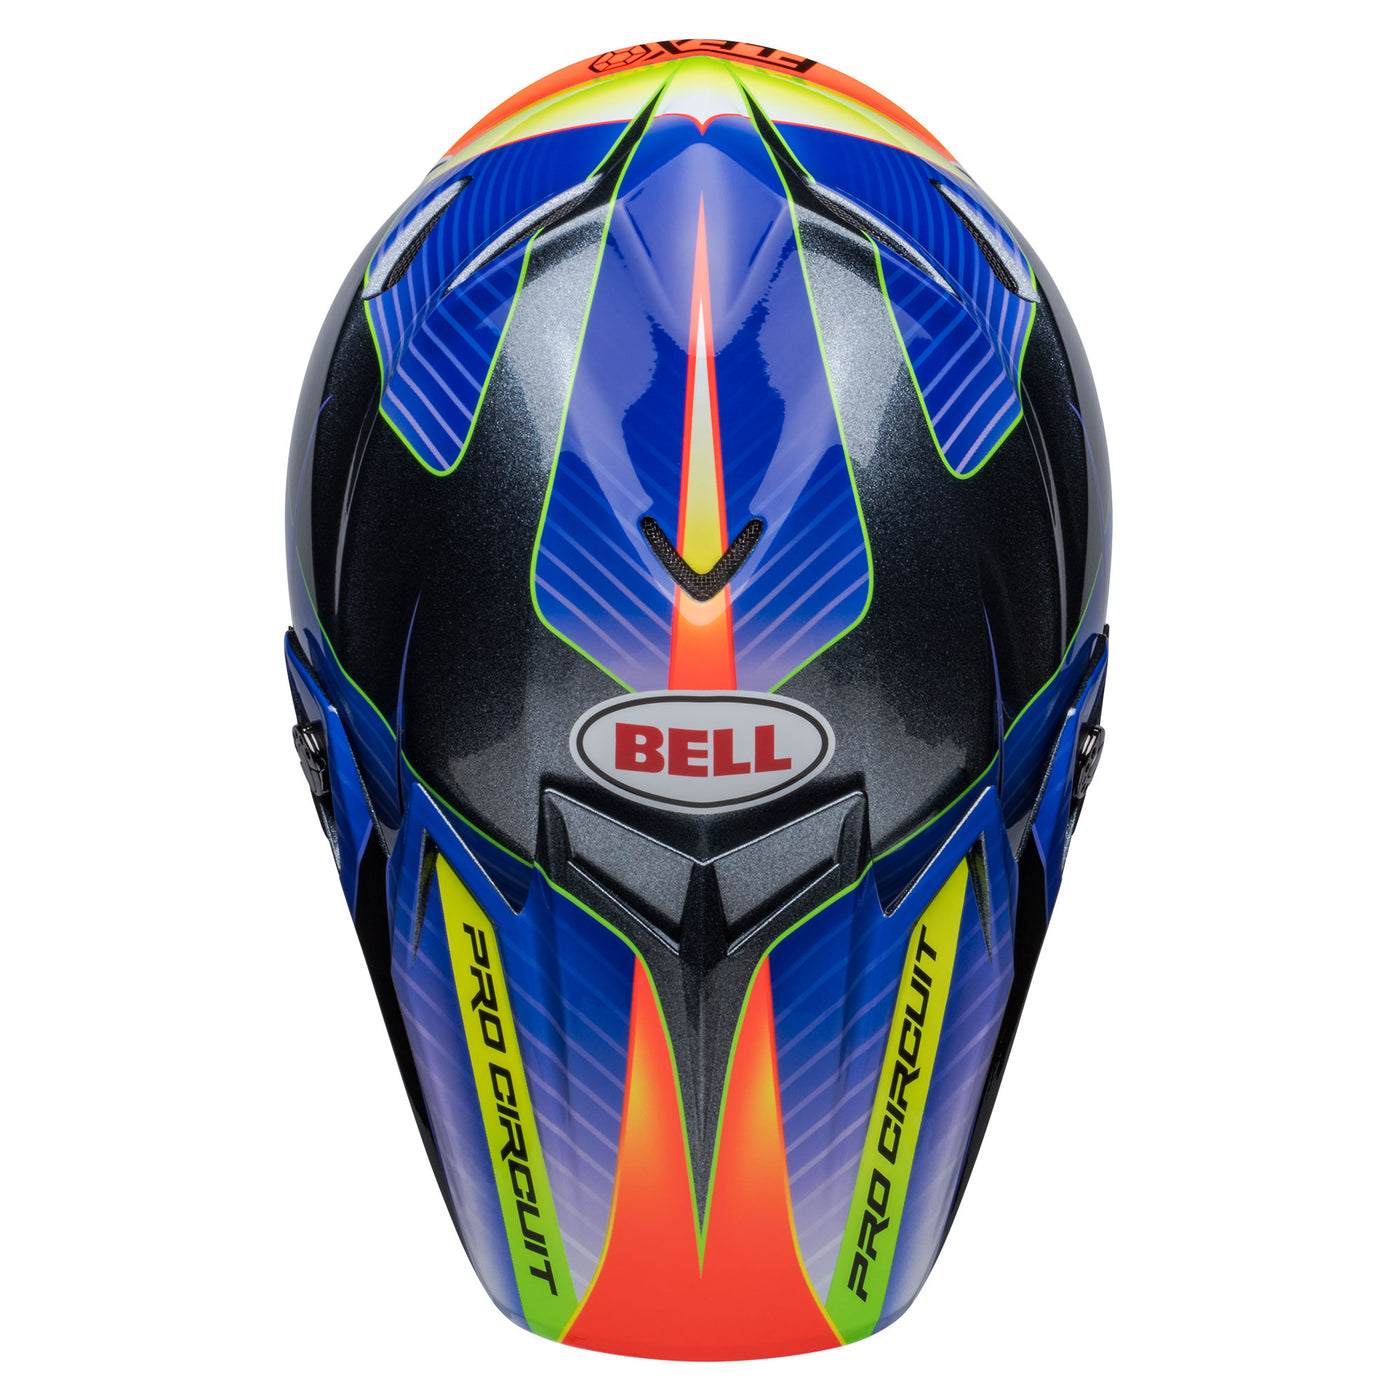 bell moto 9s flex dirt motorcycle helmet pro circuit 23 gloss silver metallic flake top